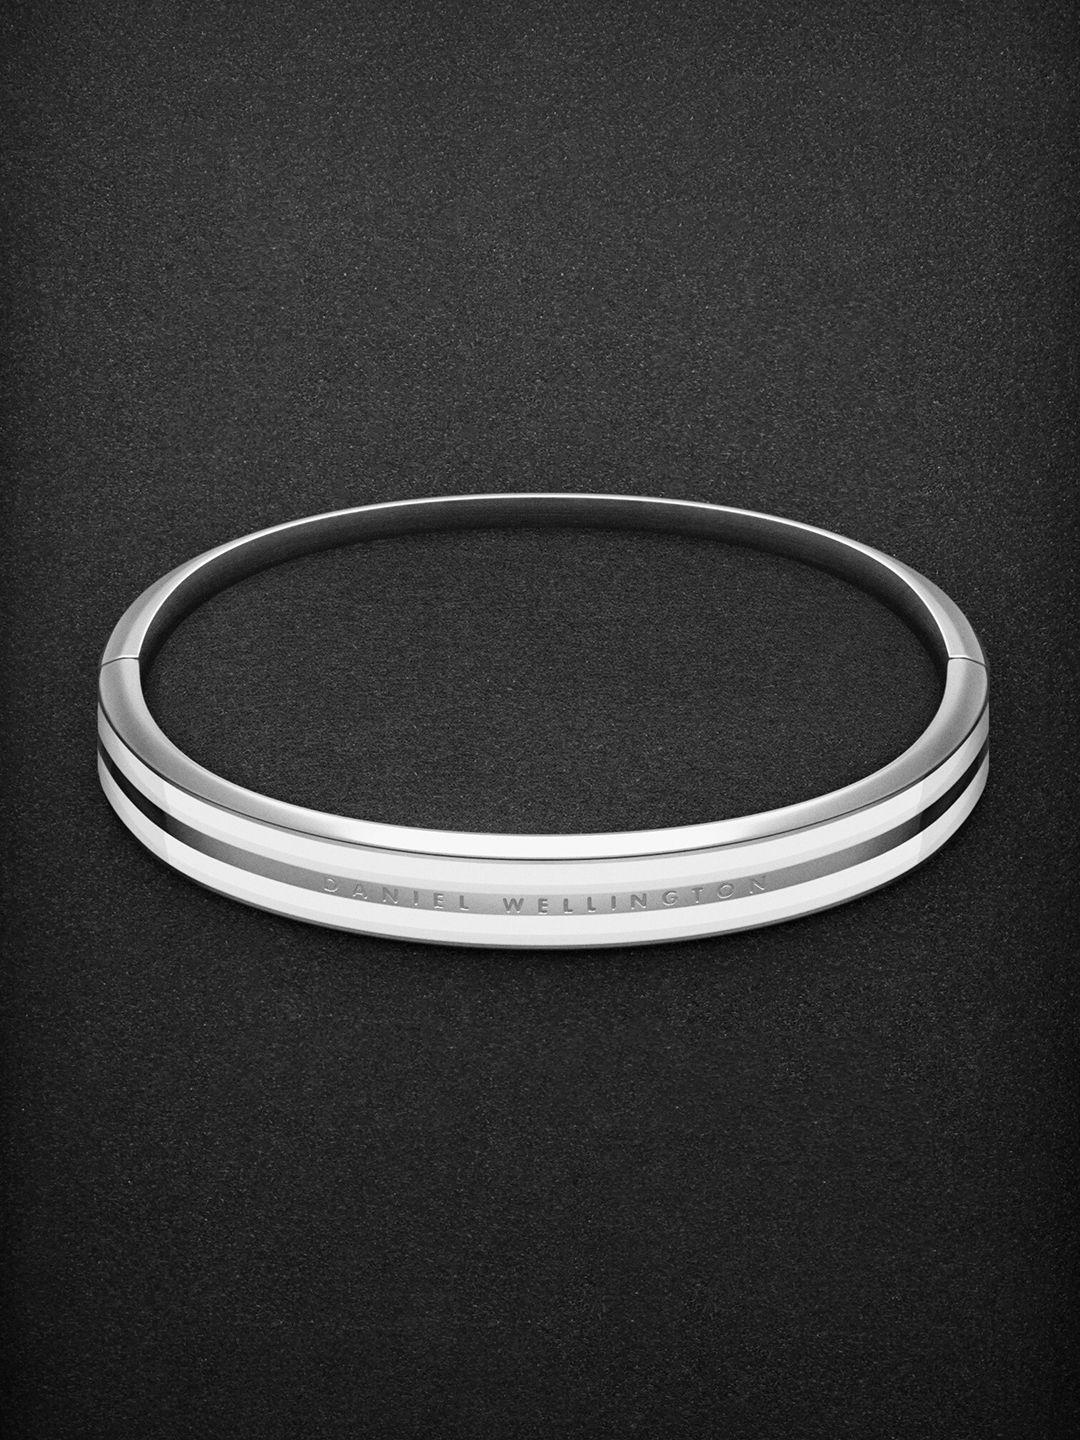 daniel wellington unisex silver-plated cuff bracelet